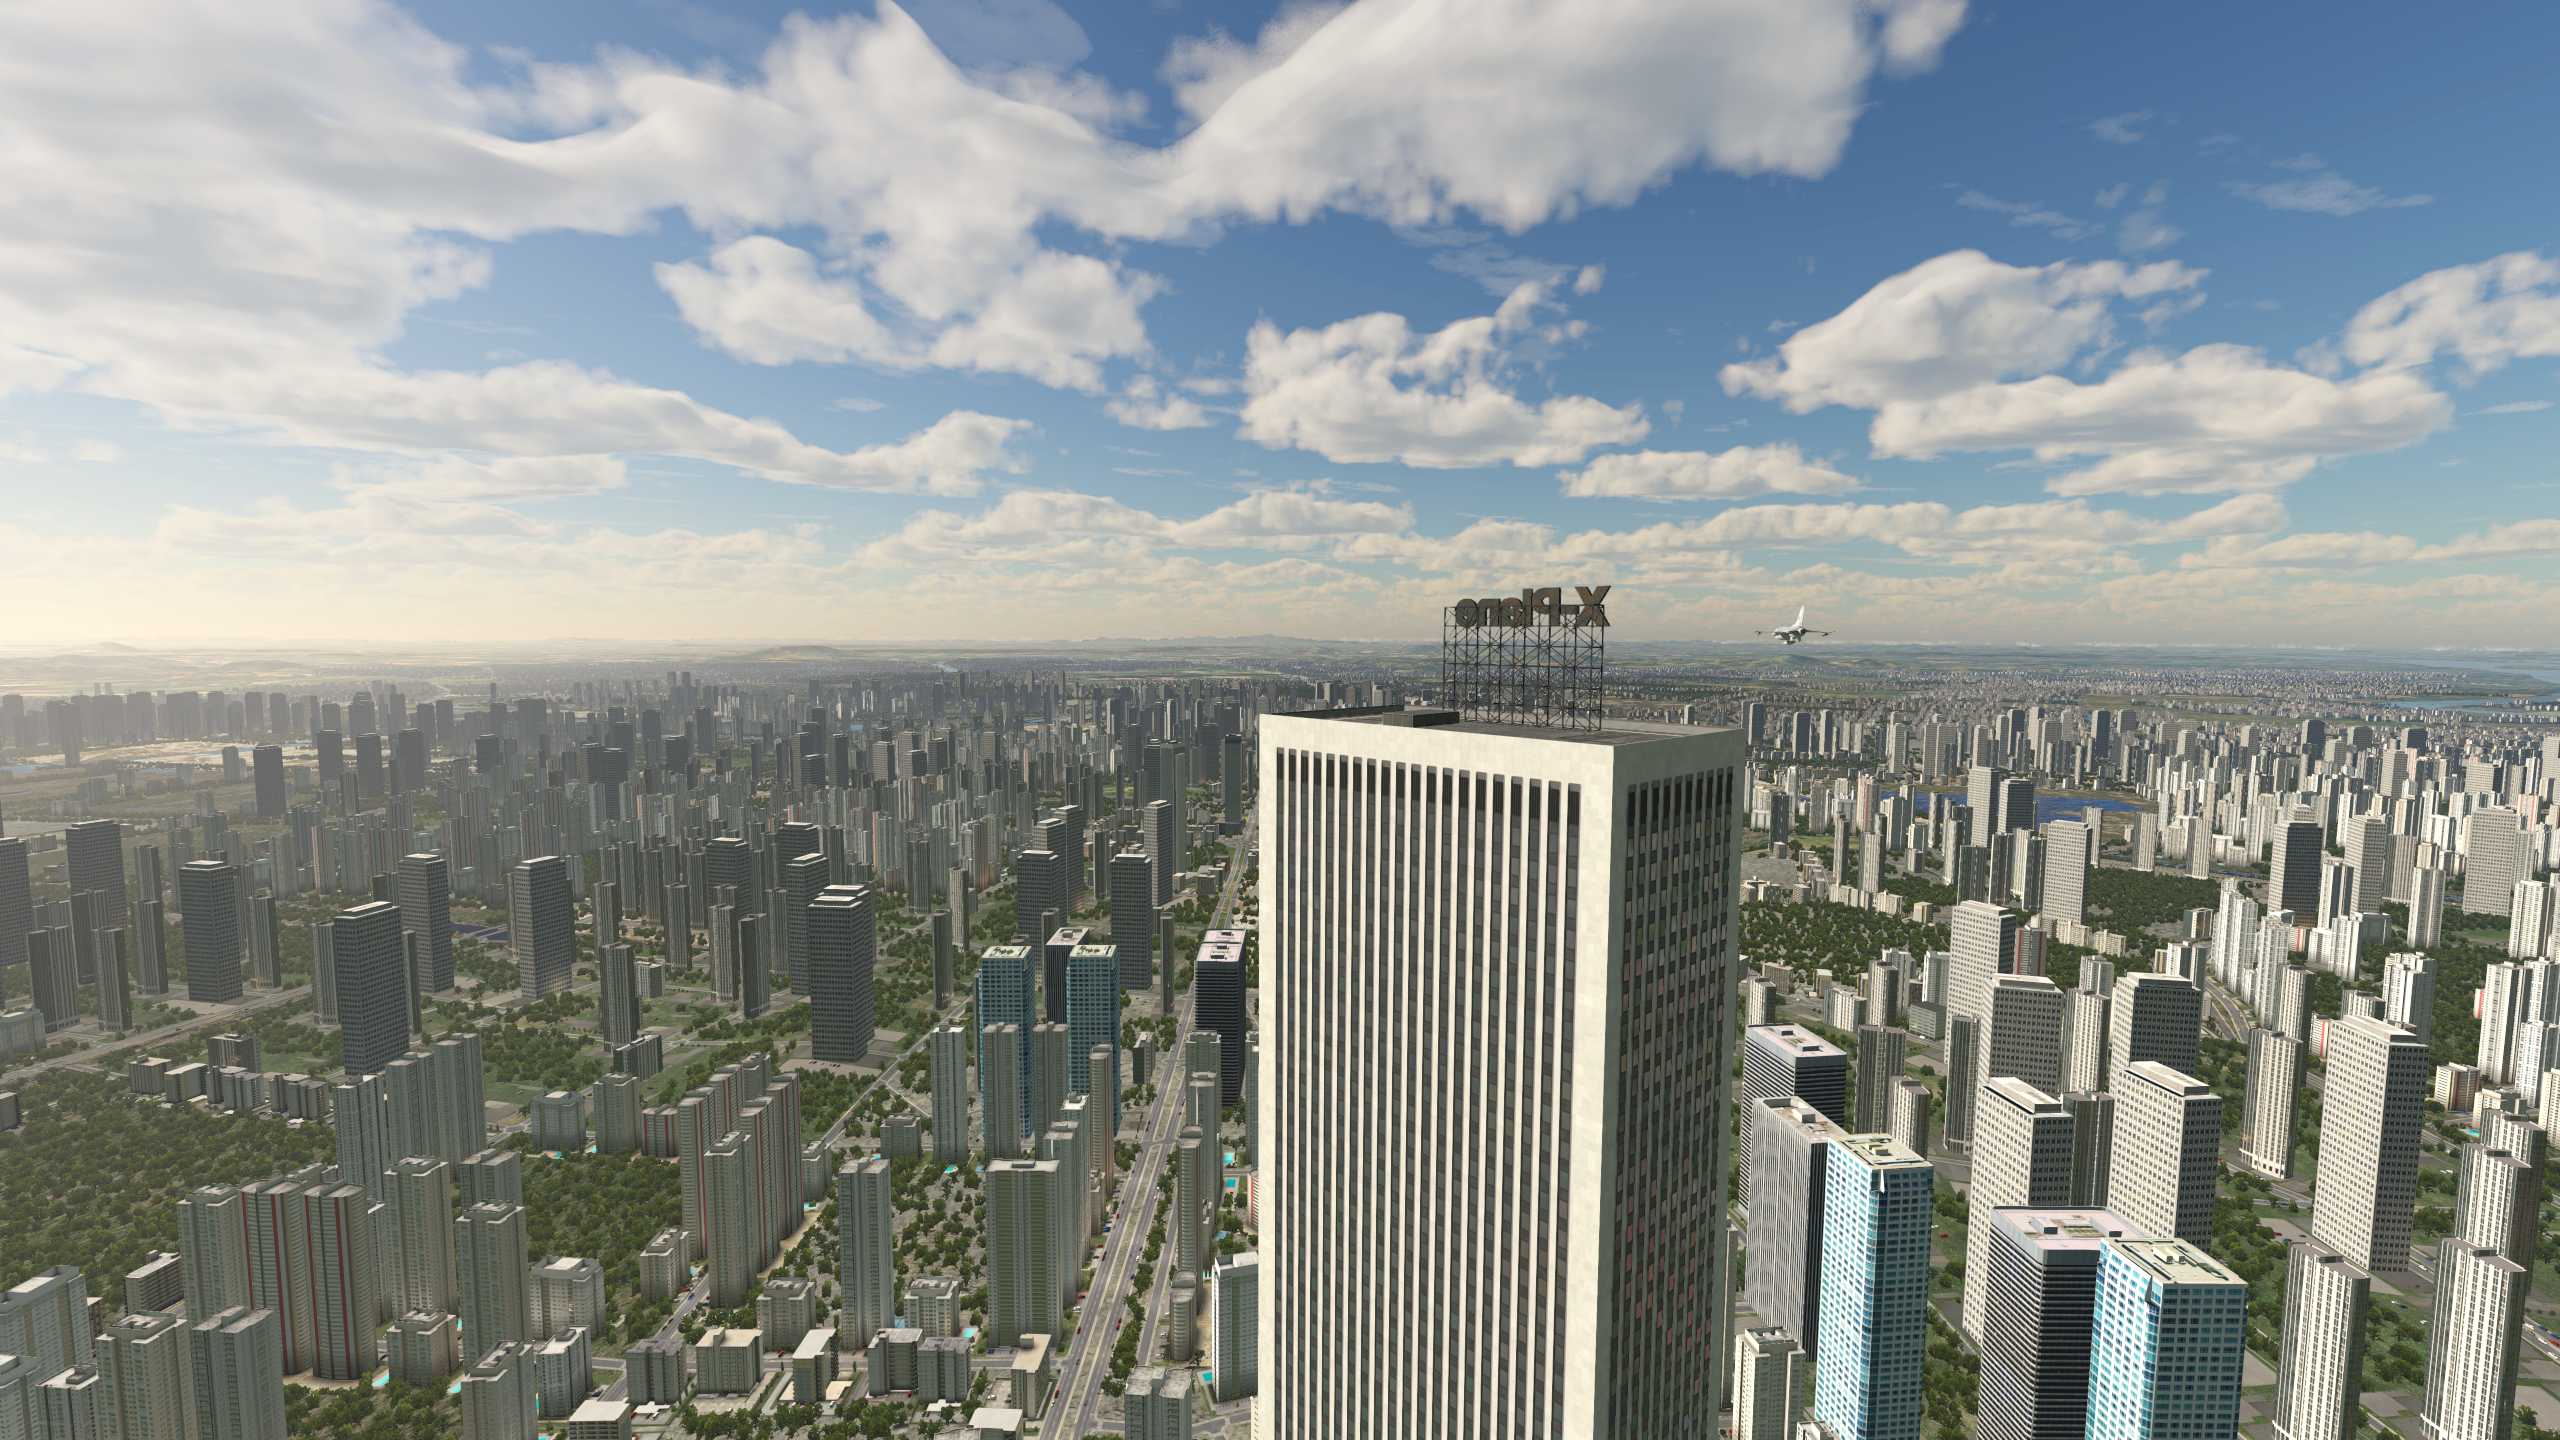 XP11 南京市中心那幢高楼居然是X-Plane大厦-3401 